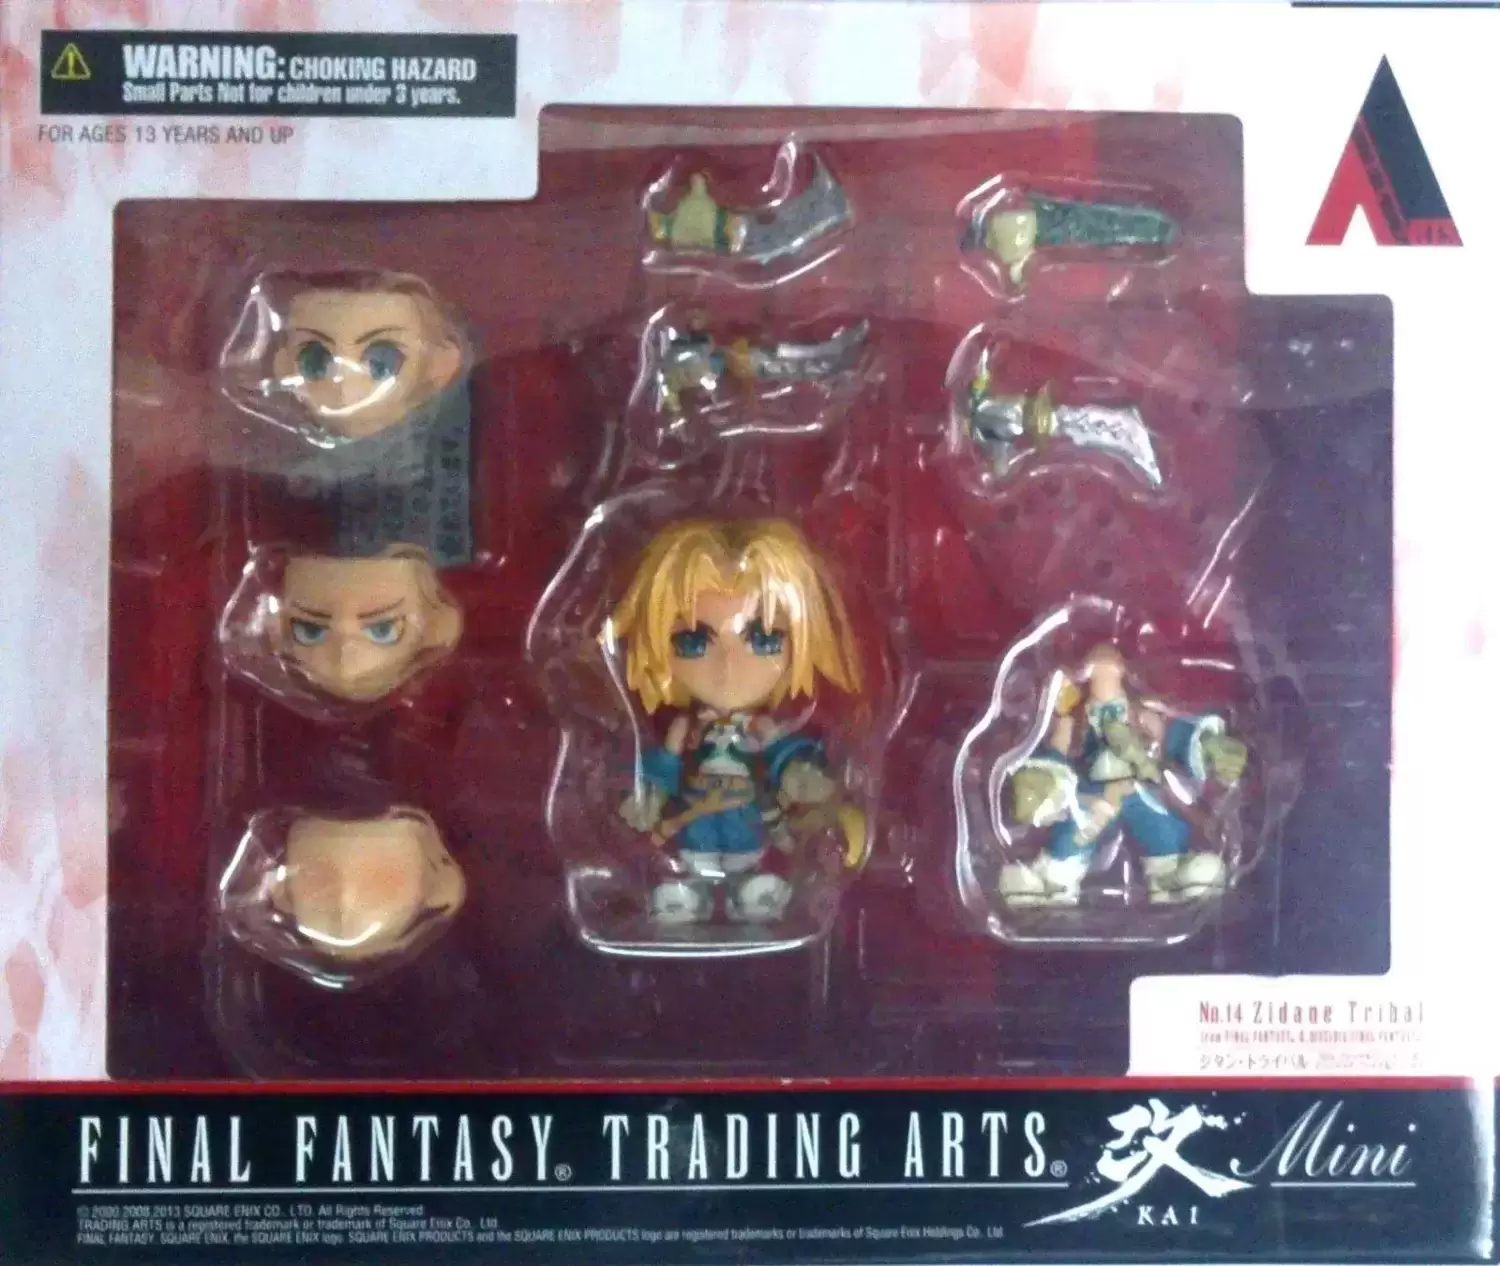 Final Fantasy Trading Arts Mini - Zidane Tribal